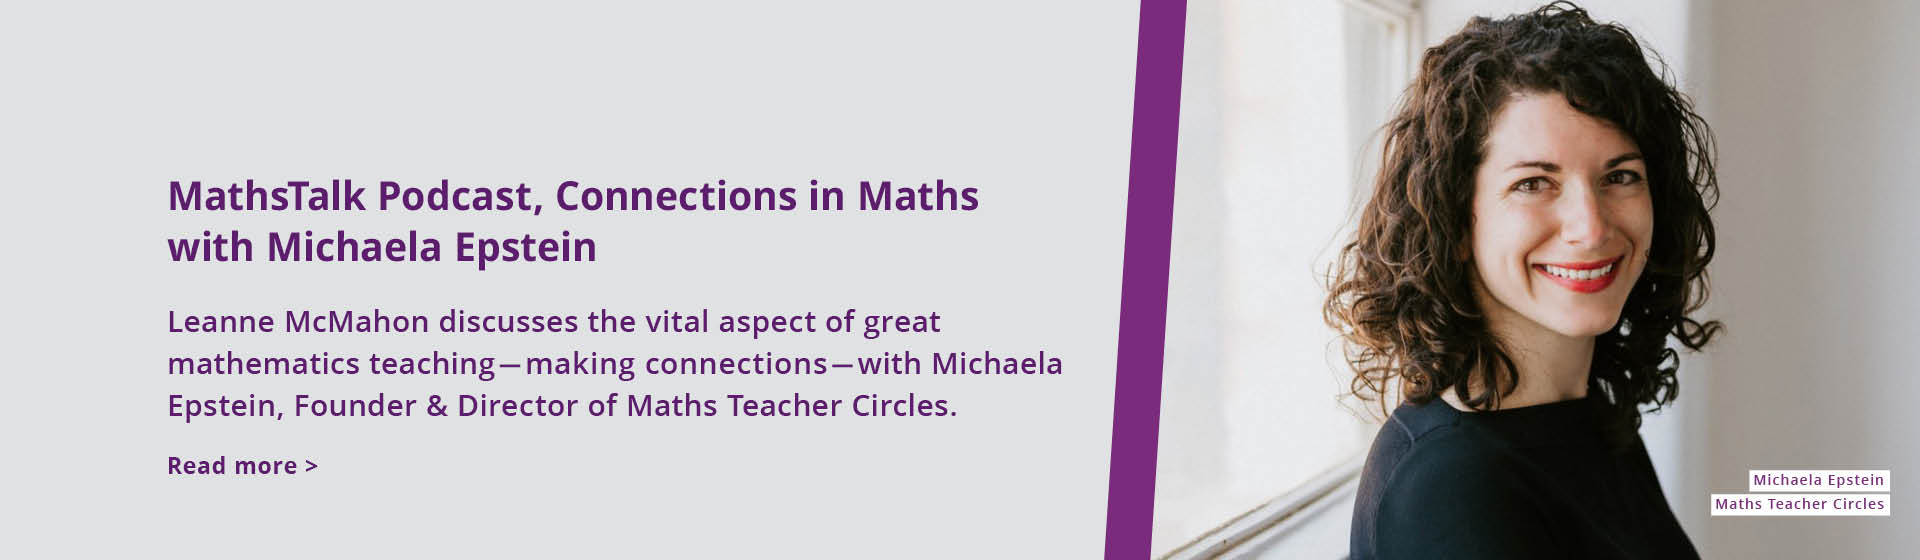 MathsTalk Podcast guest Michaela Epstein